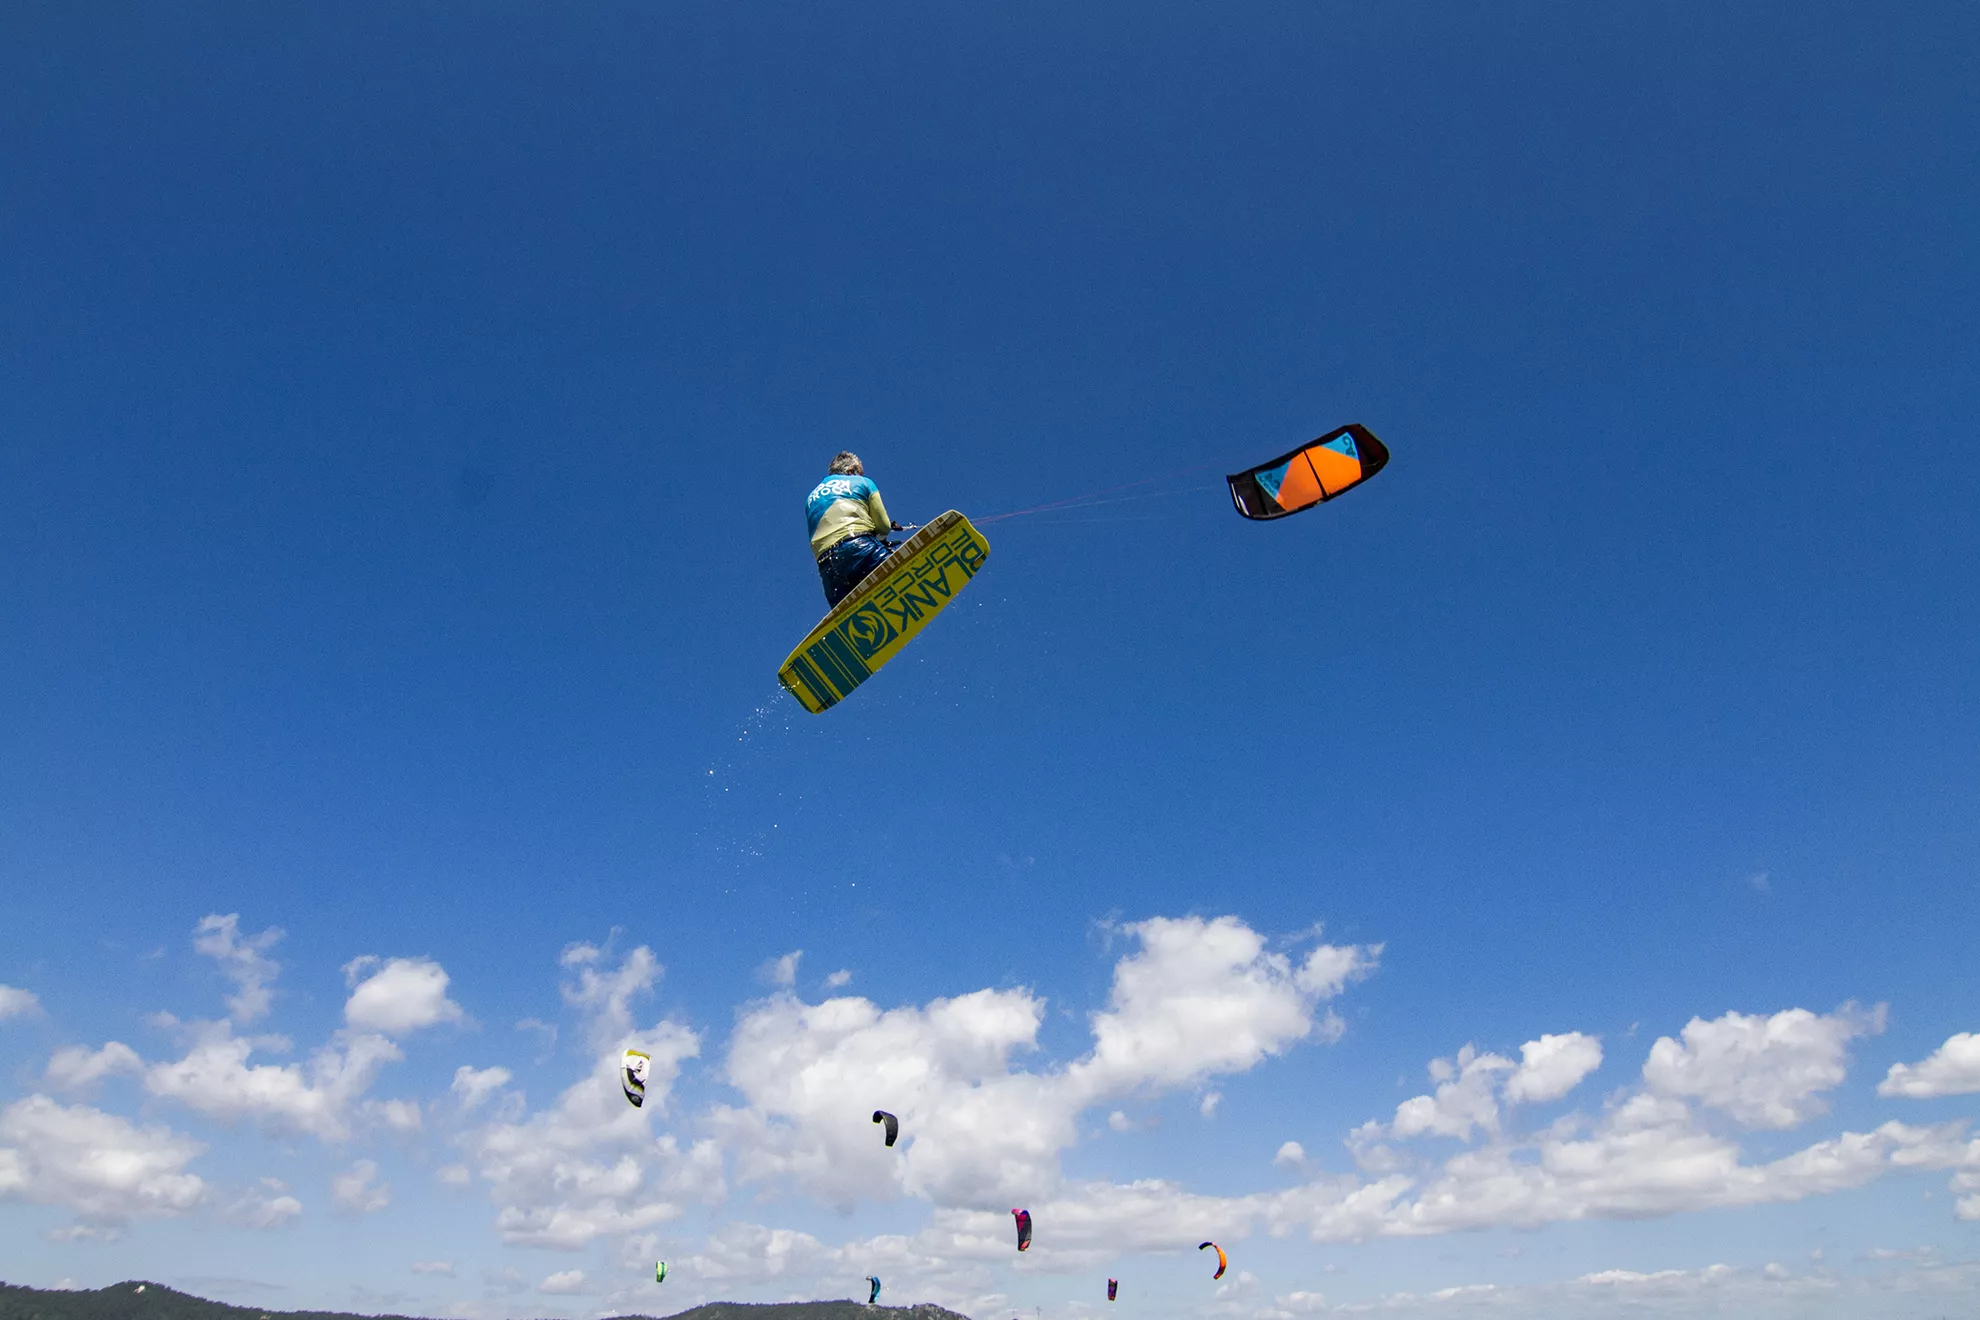 Kook Proof Activity Center in Cape Verde, Africa | Kitesurfing - Rated 1.4